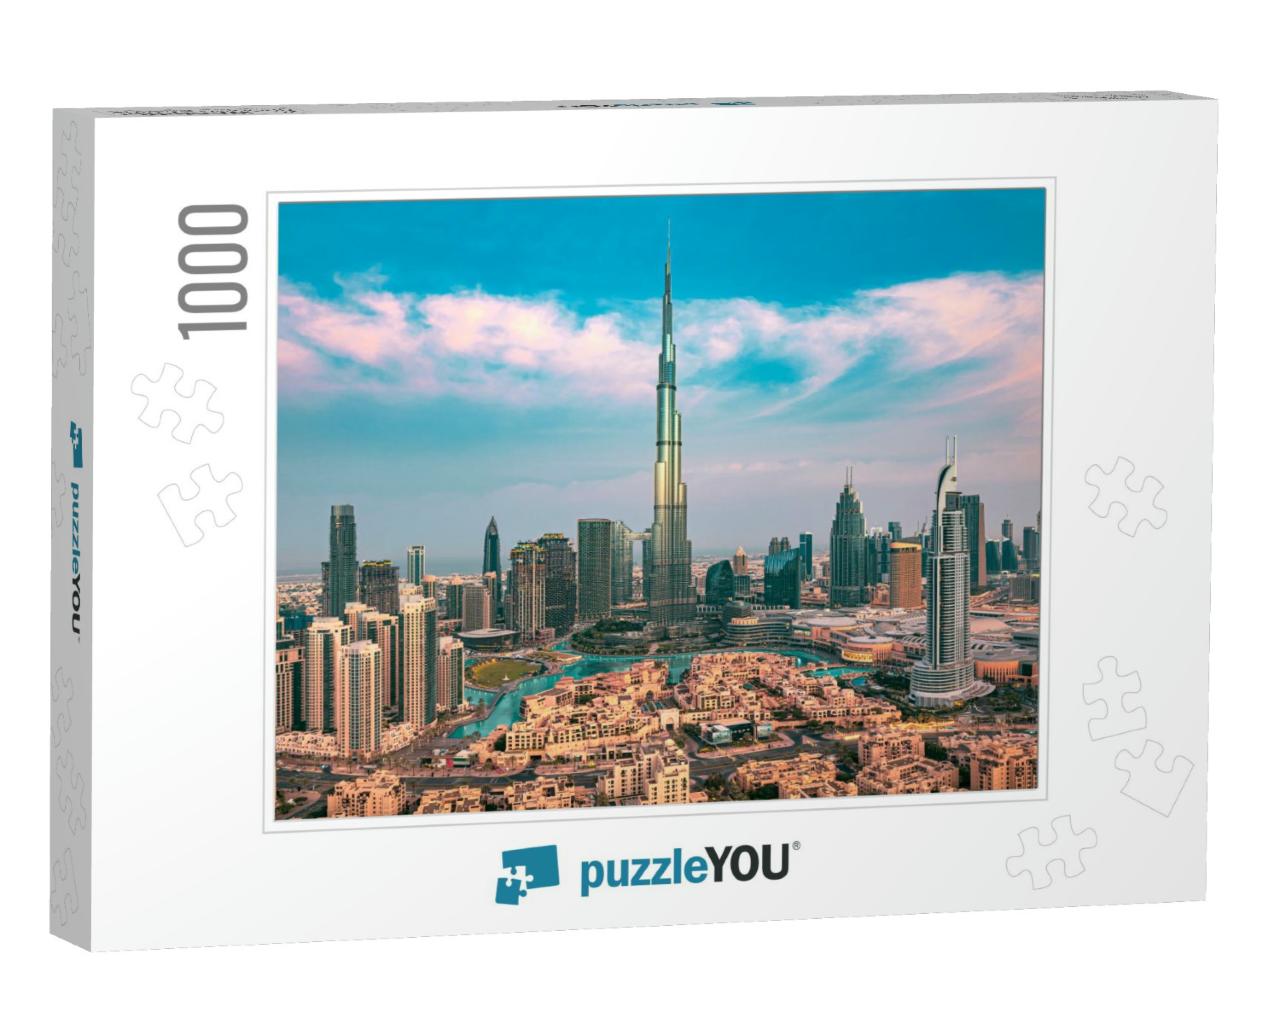 Dubai - Amazing City Center Skyline with Luxury Skyscrape... Jigsaw Puzzle with 1000 pieces